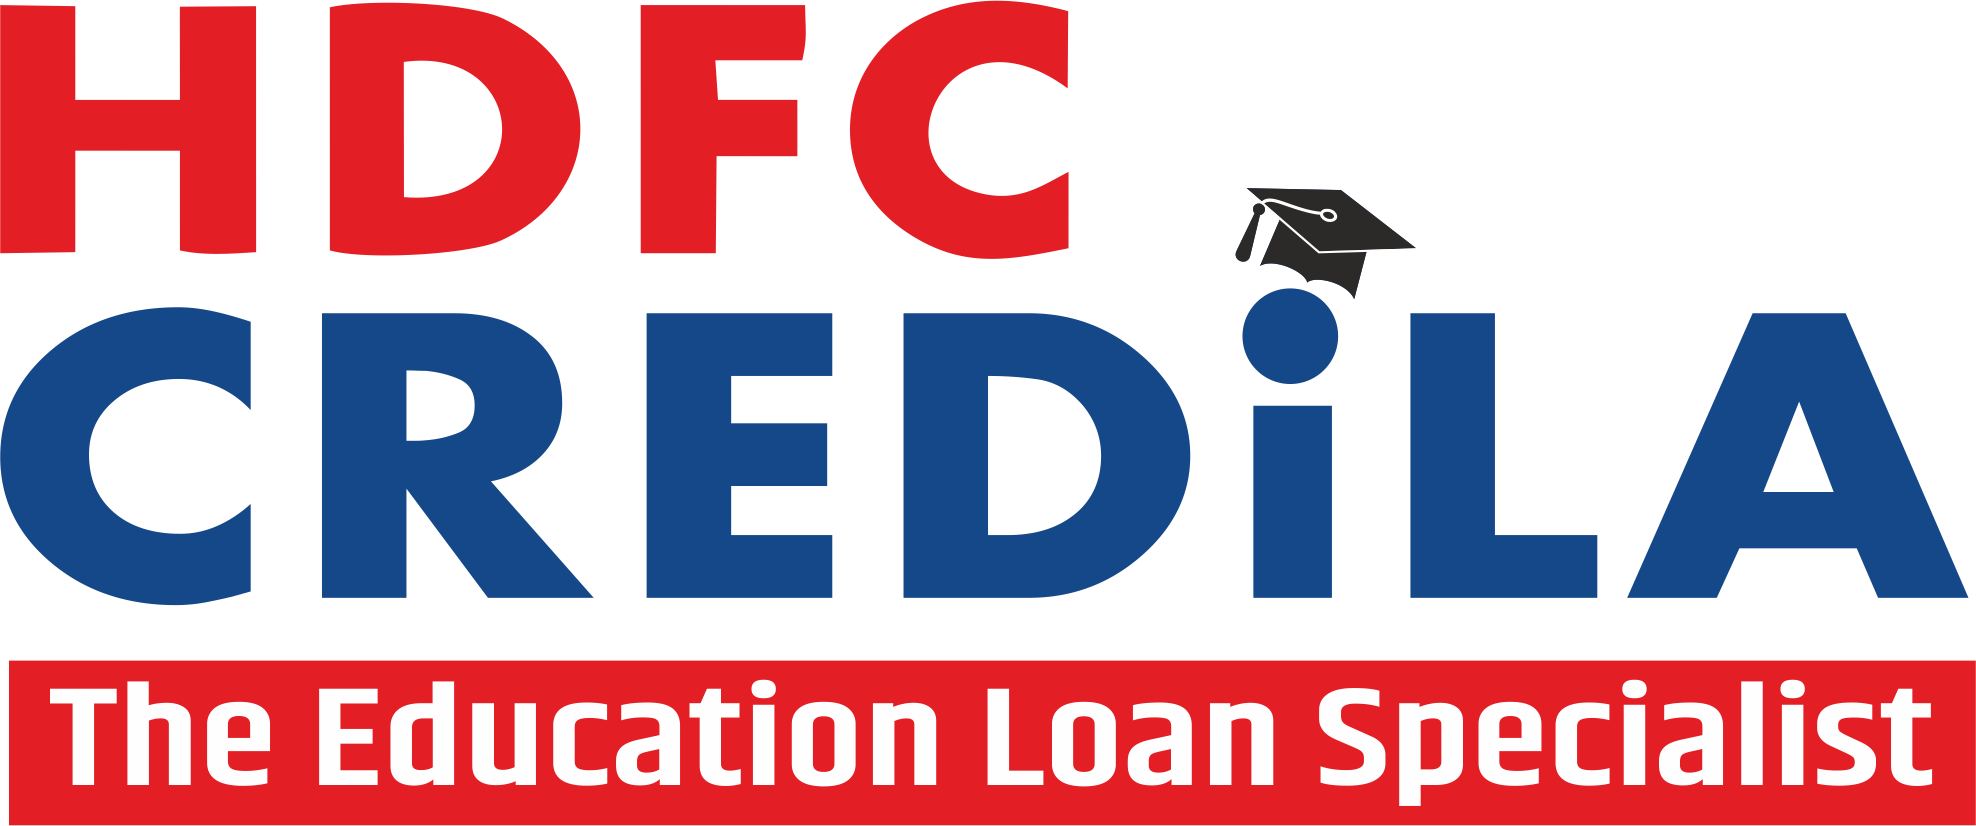 Direct link for HDFC CREDiLA loan application